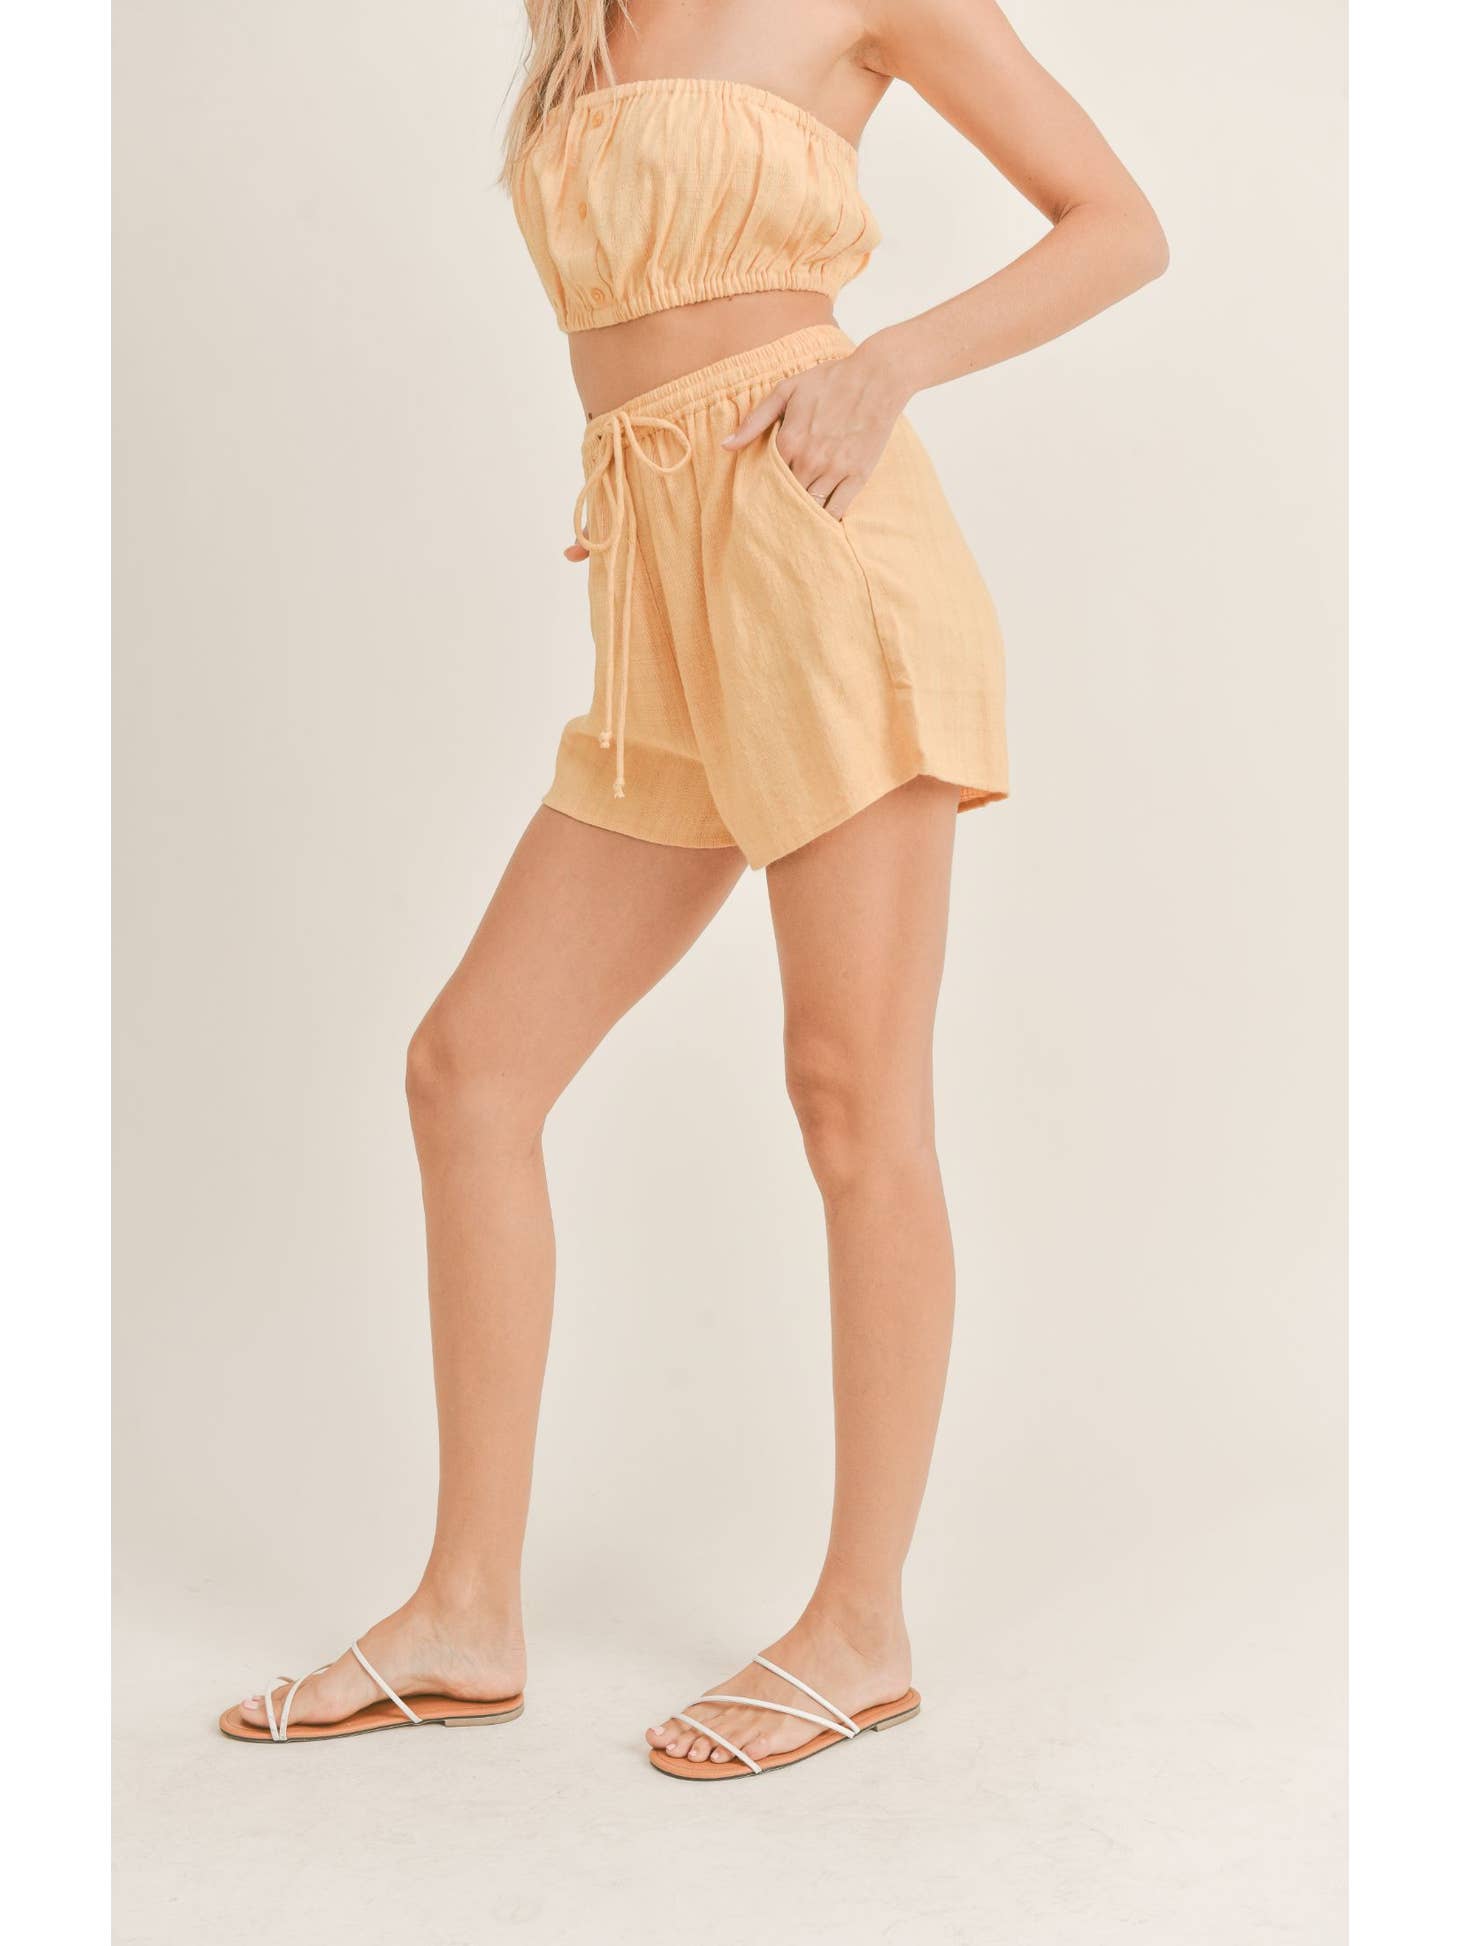 Miss Sunshine Linen Shorts